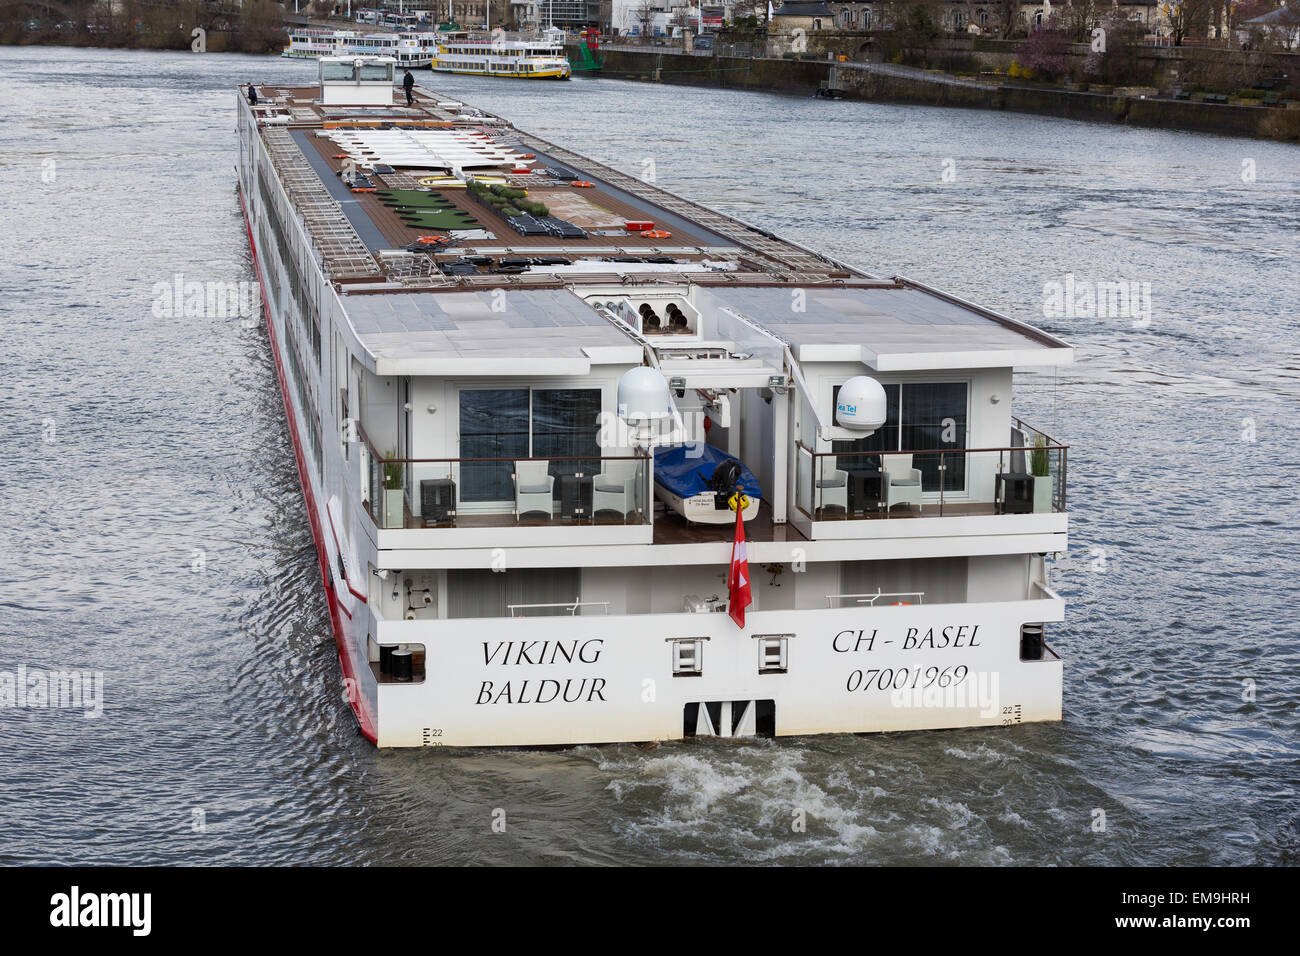 Die Kreuzfahrt-Schiff Viking Baldur - Viking River Cruises - auf dem Main bei Würzberg, Bayern, Germany Stockfoto